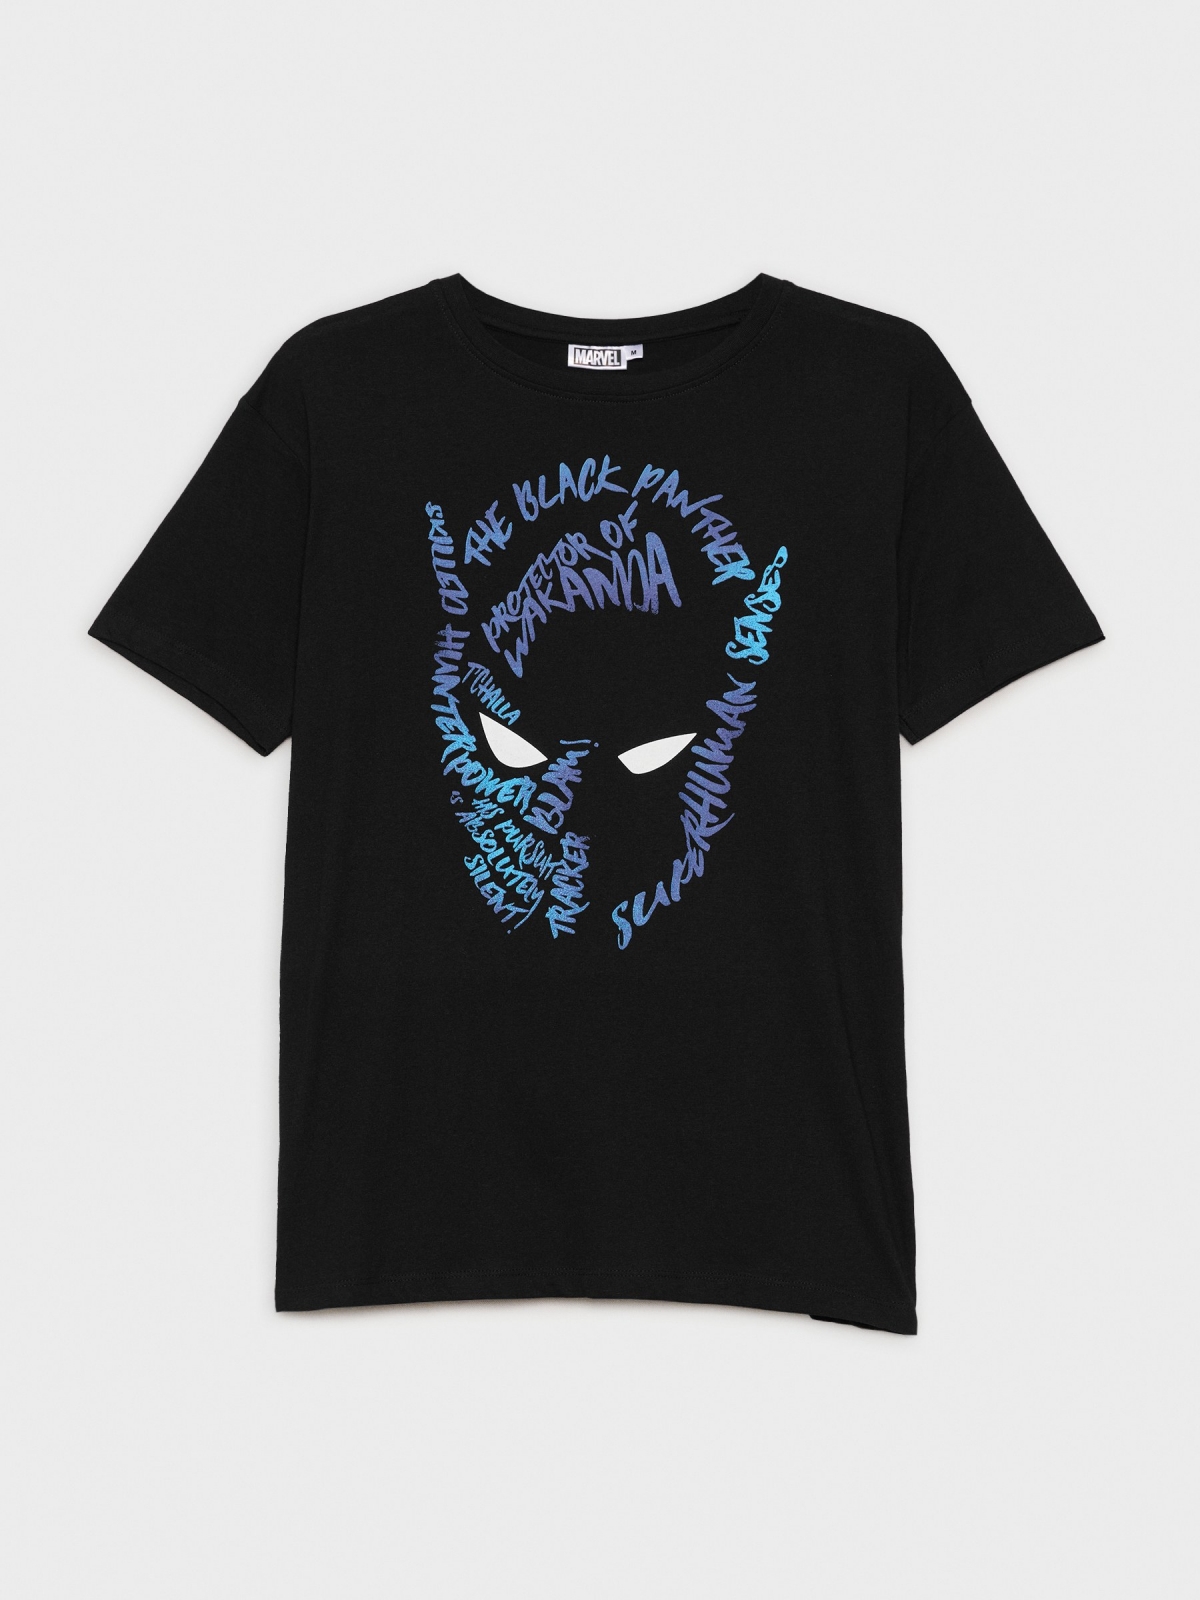  Black panther print t-shirt black